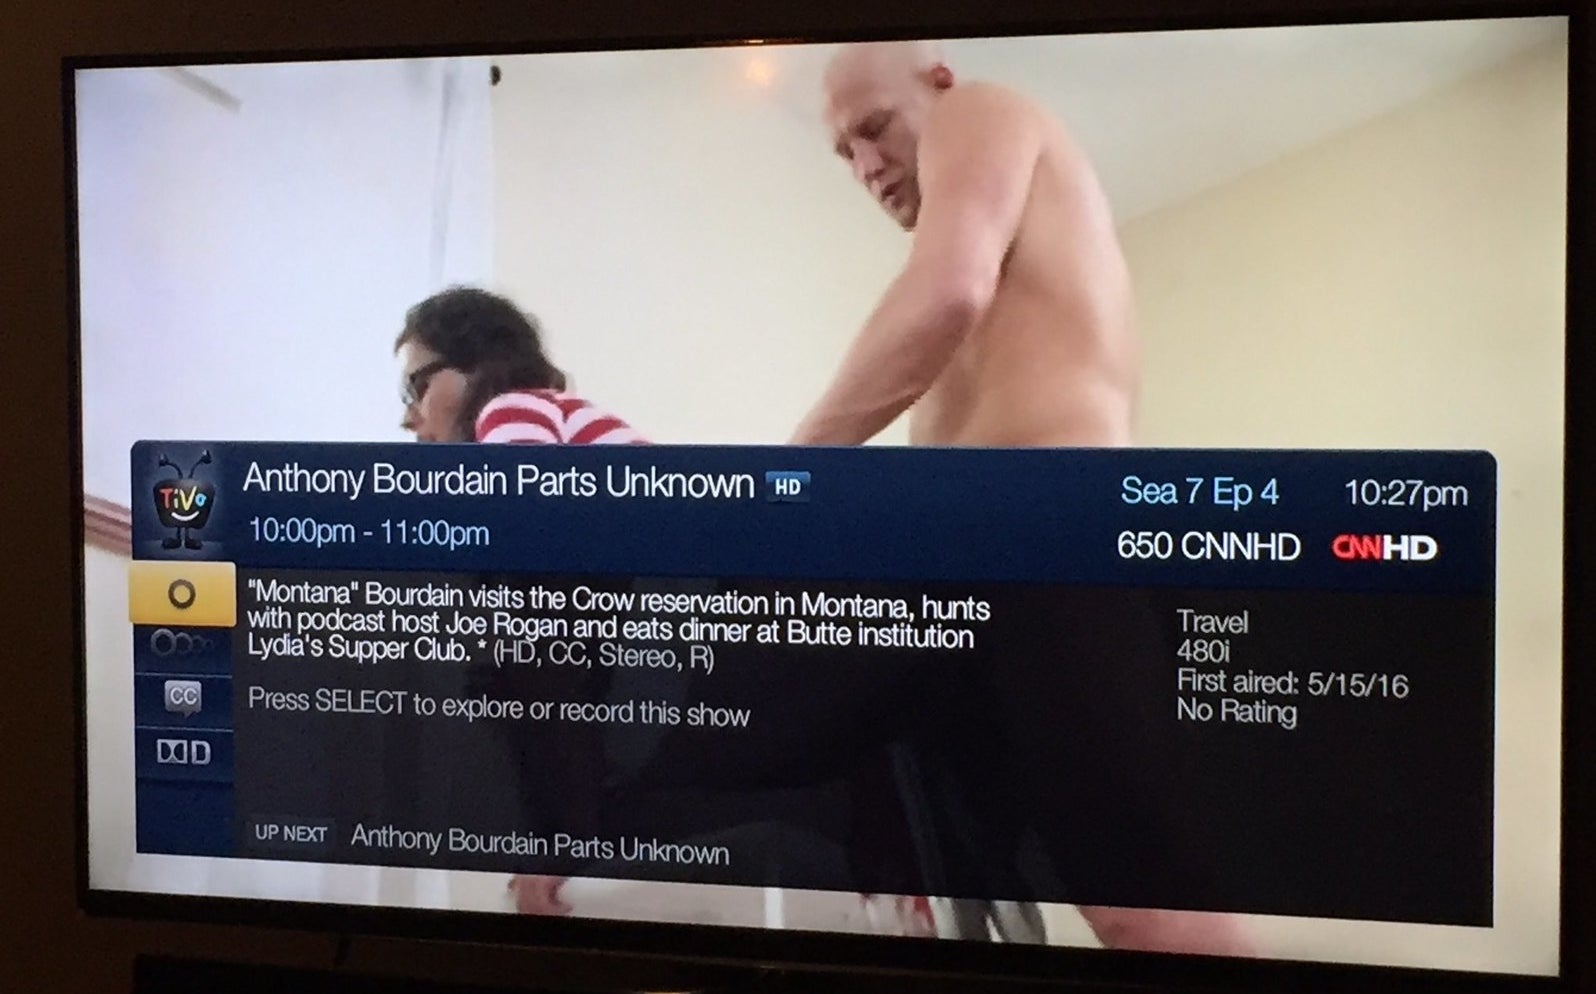 bryan letkeman add porn channels on tv photo